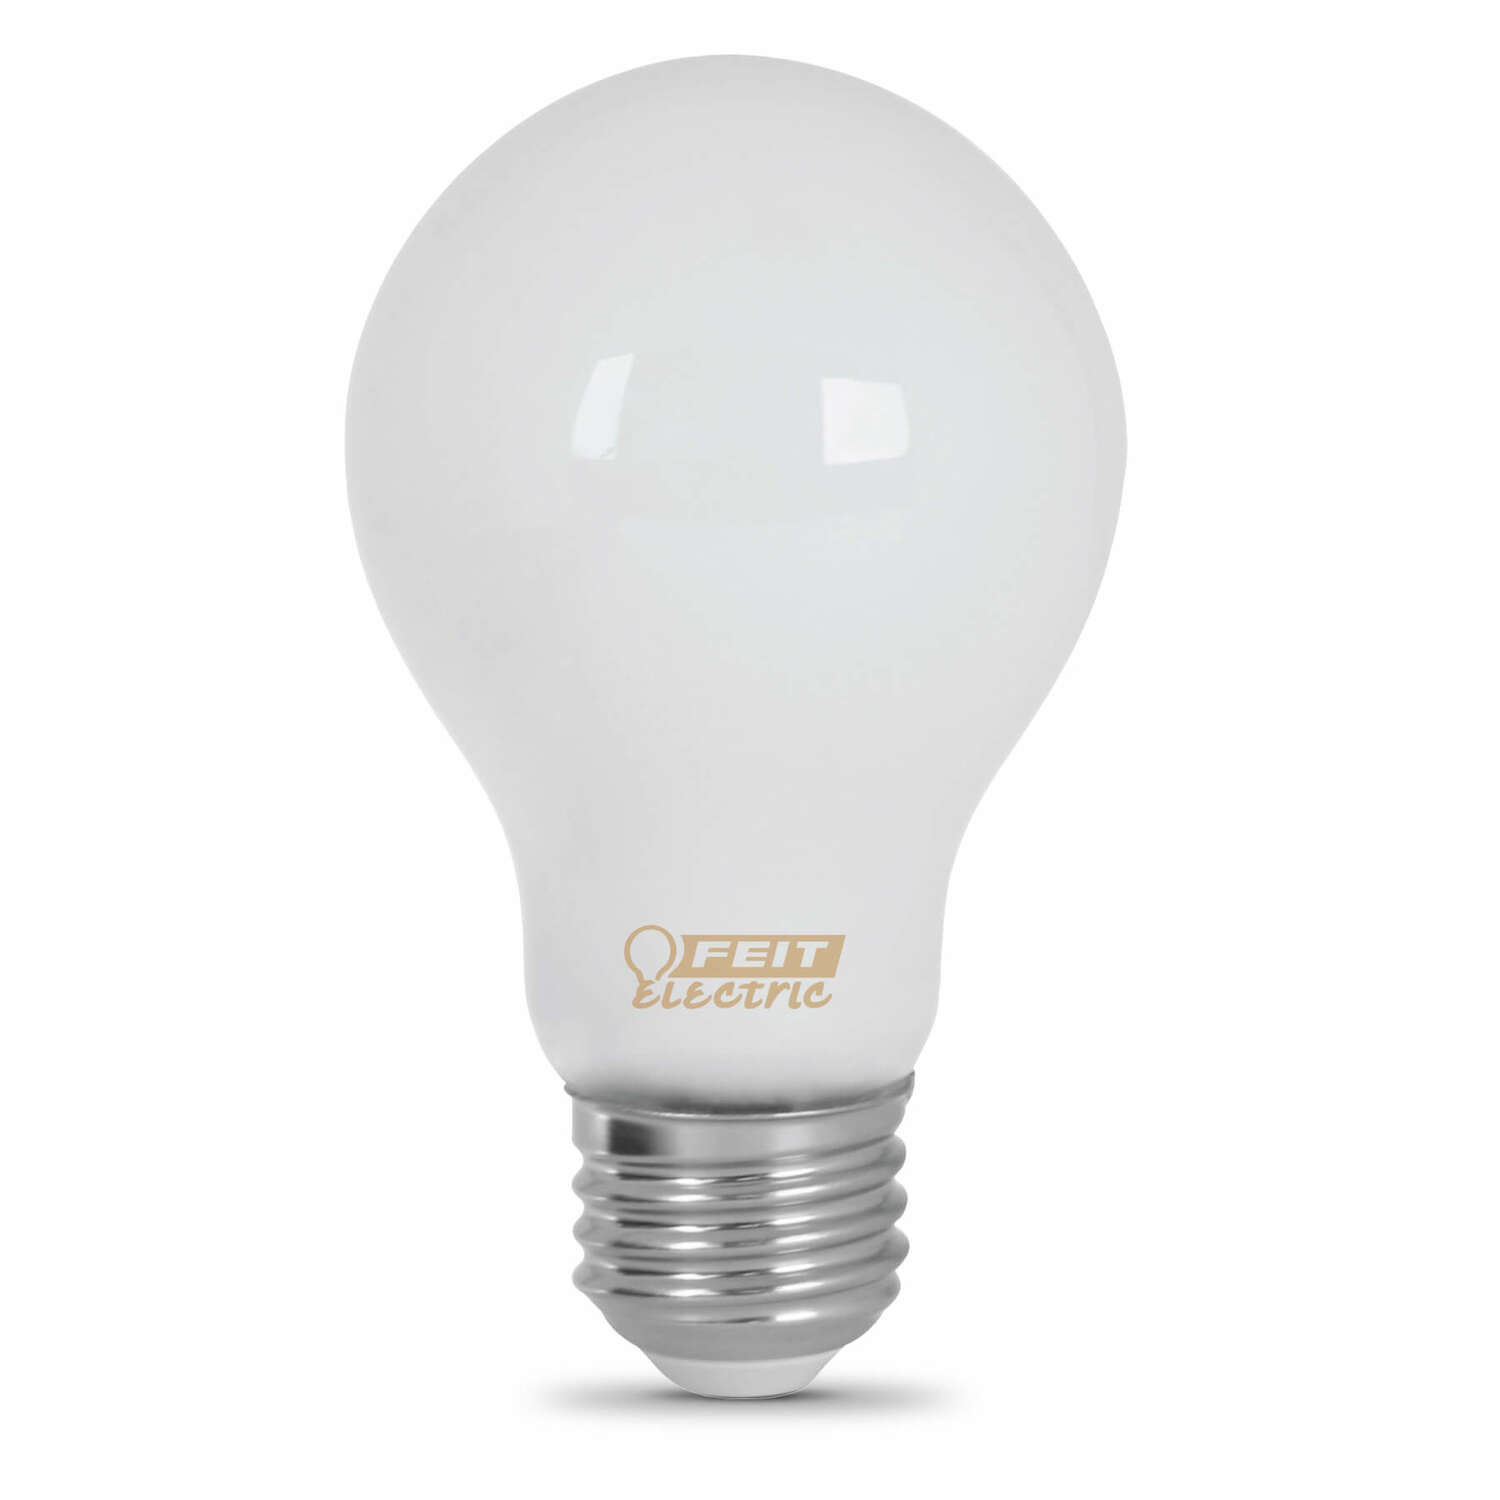 How Many Amps Does A 60-Watt LED Bulb Use